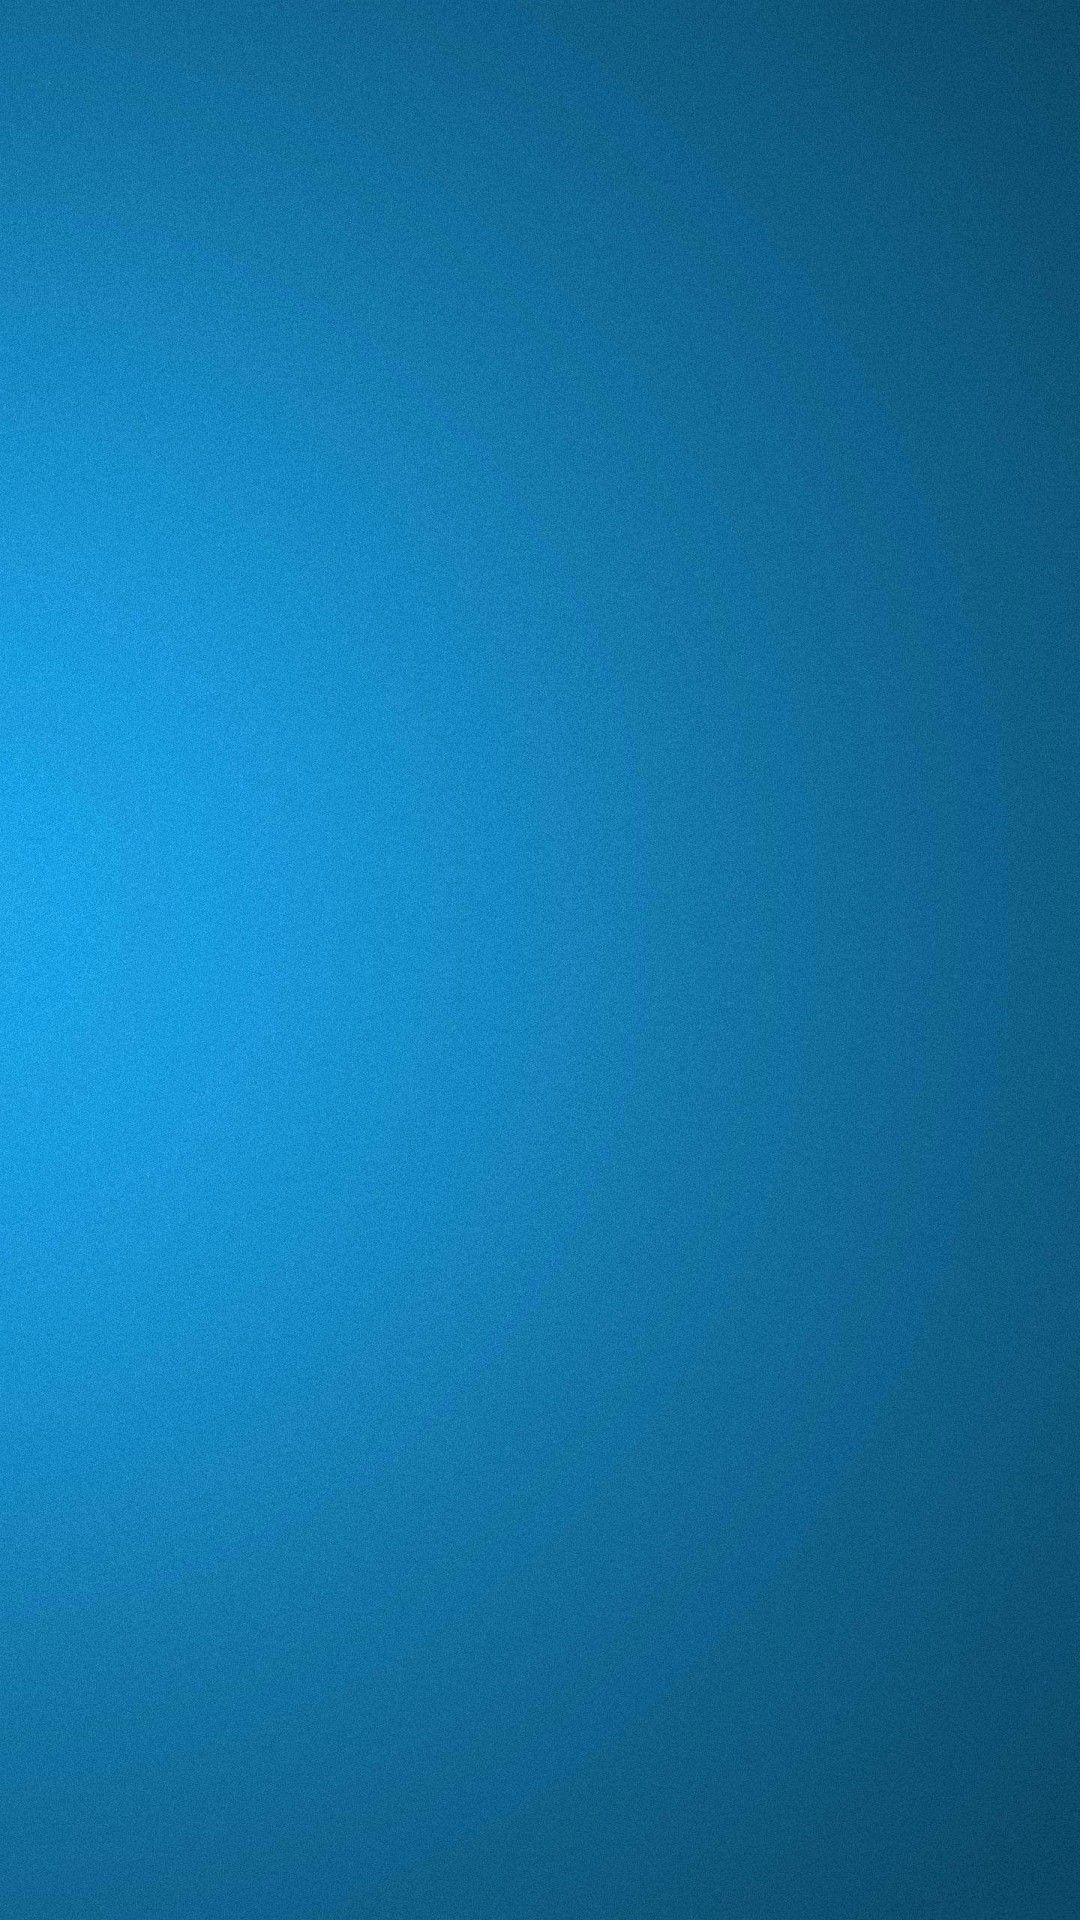 Iphone Wallpaper Hd Blue Colour - 1080x1920 Wallpaper 